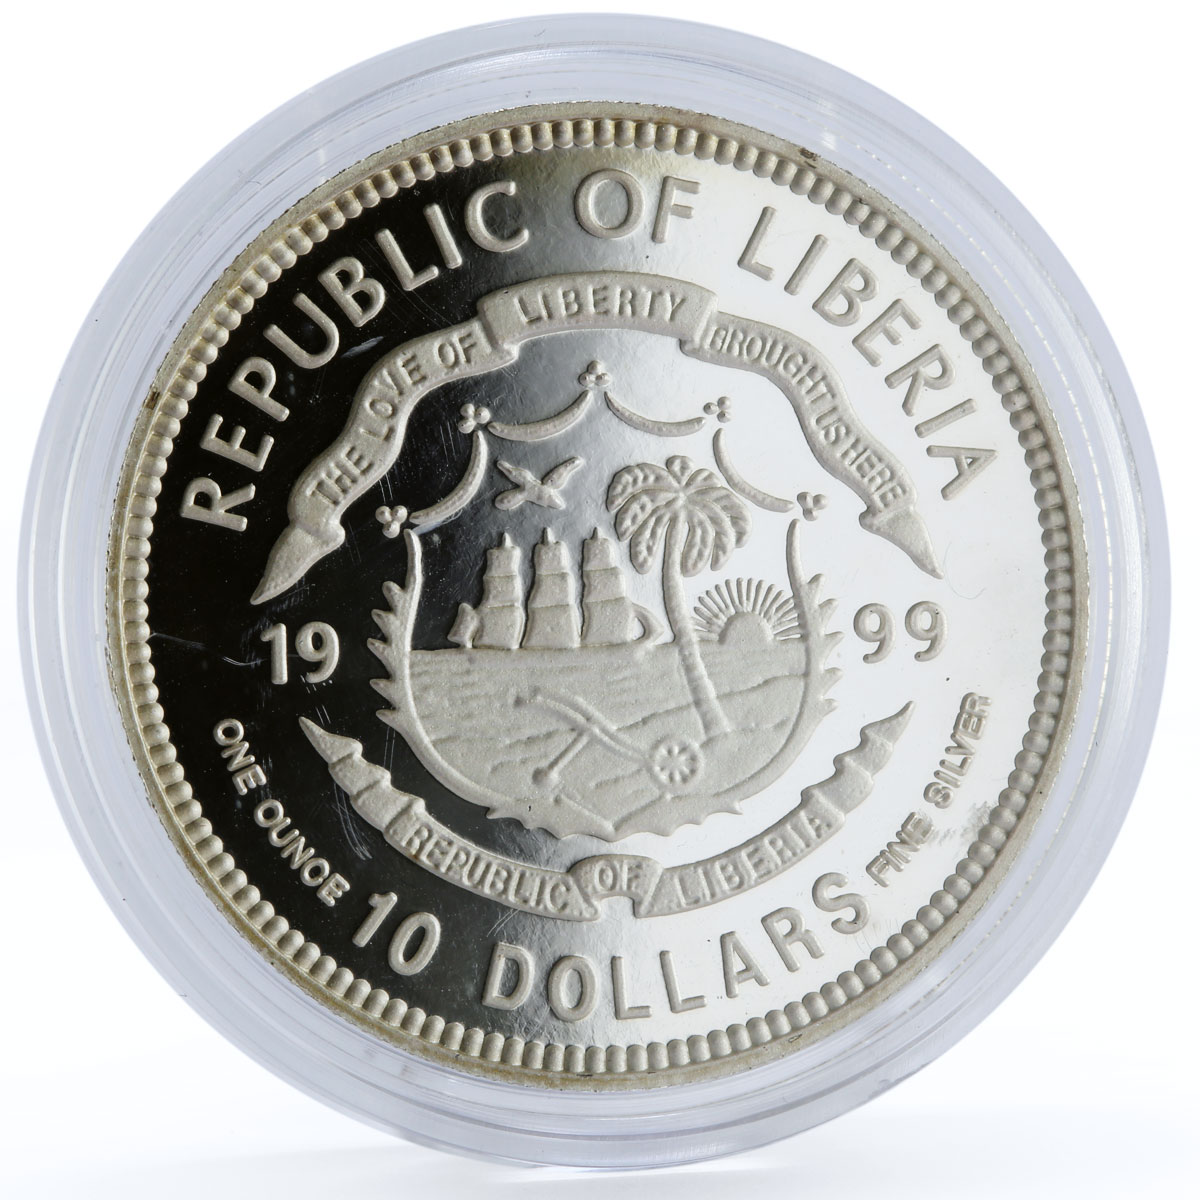 Liberia 10 dollars Transrapid-08 Train Ralways Railroad proof silver coin 1999